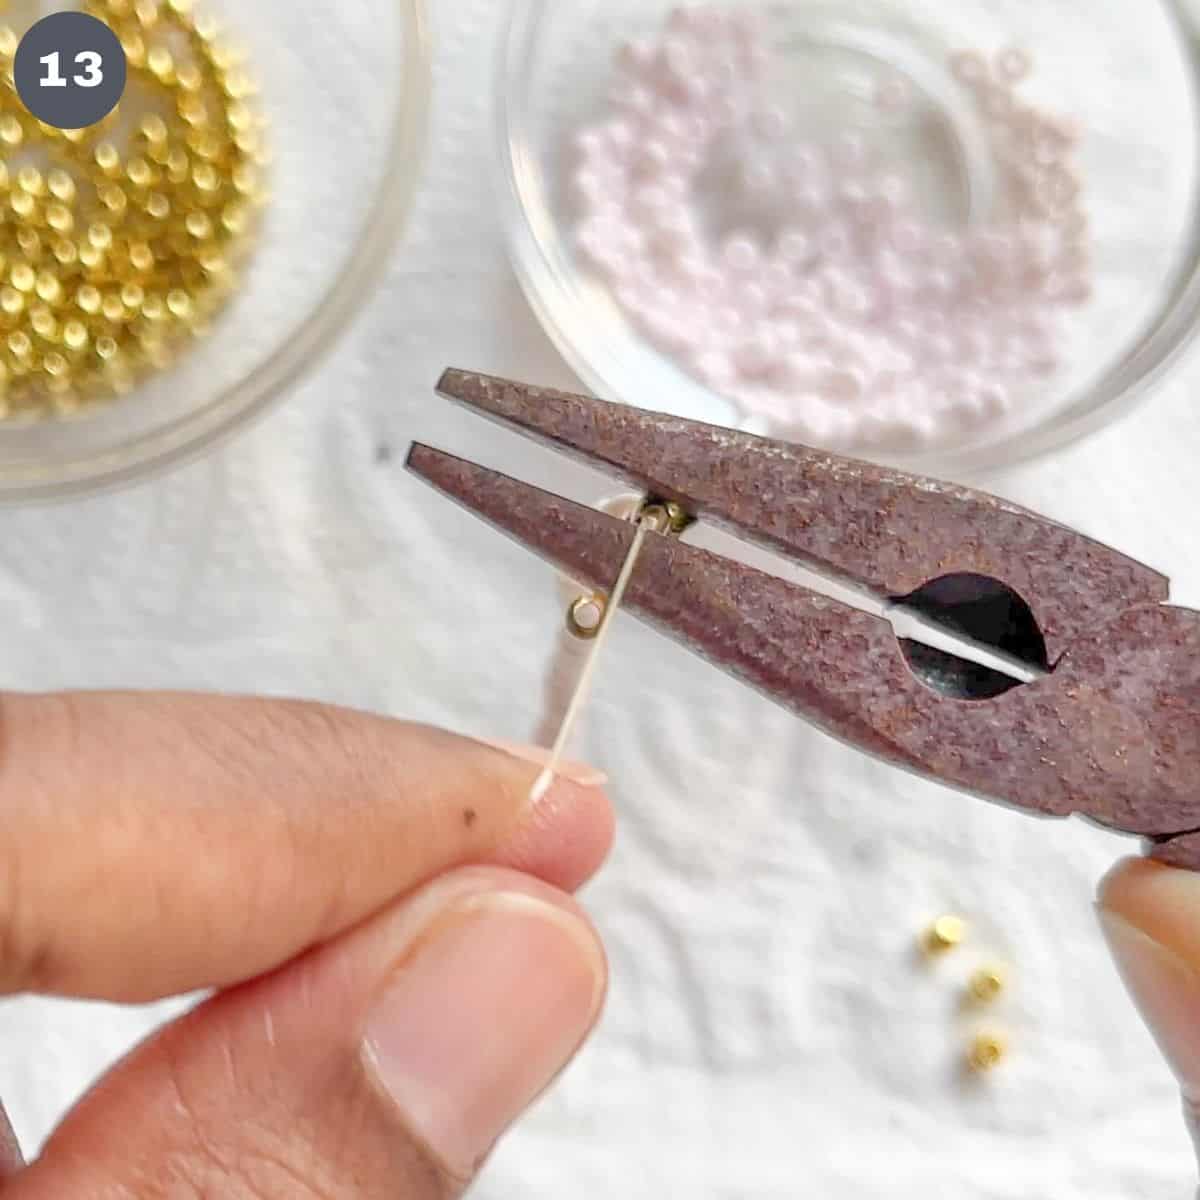 Using a plier to press a crimp bead.